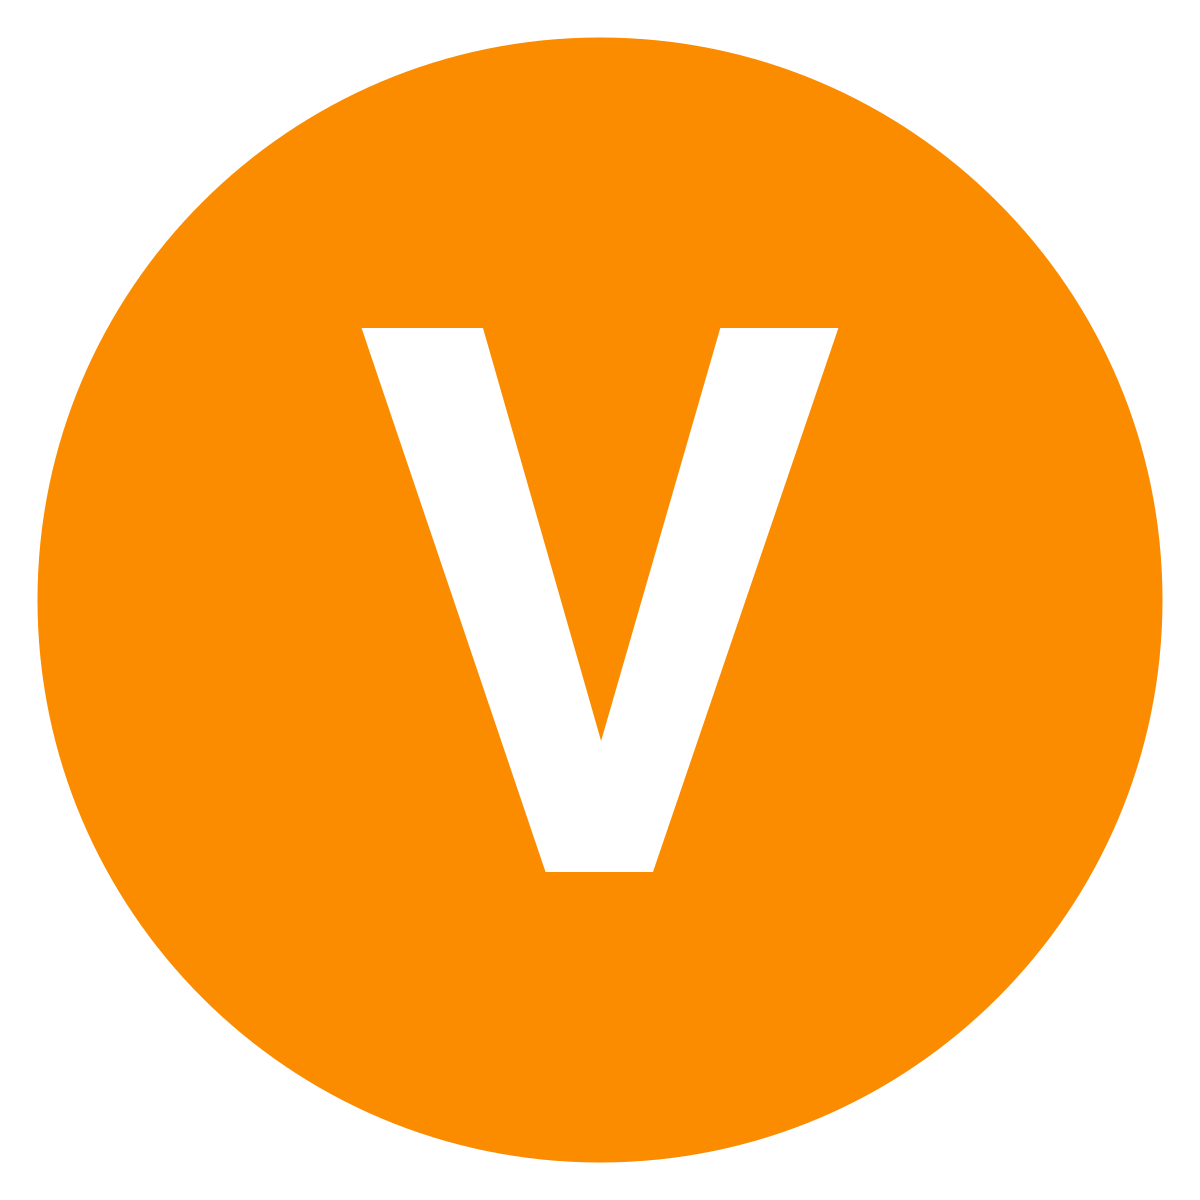 Vintaggy Logo